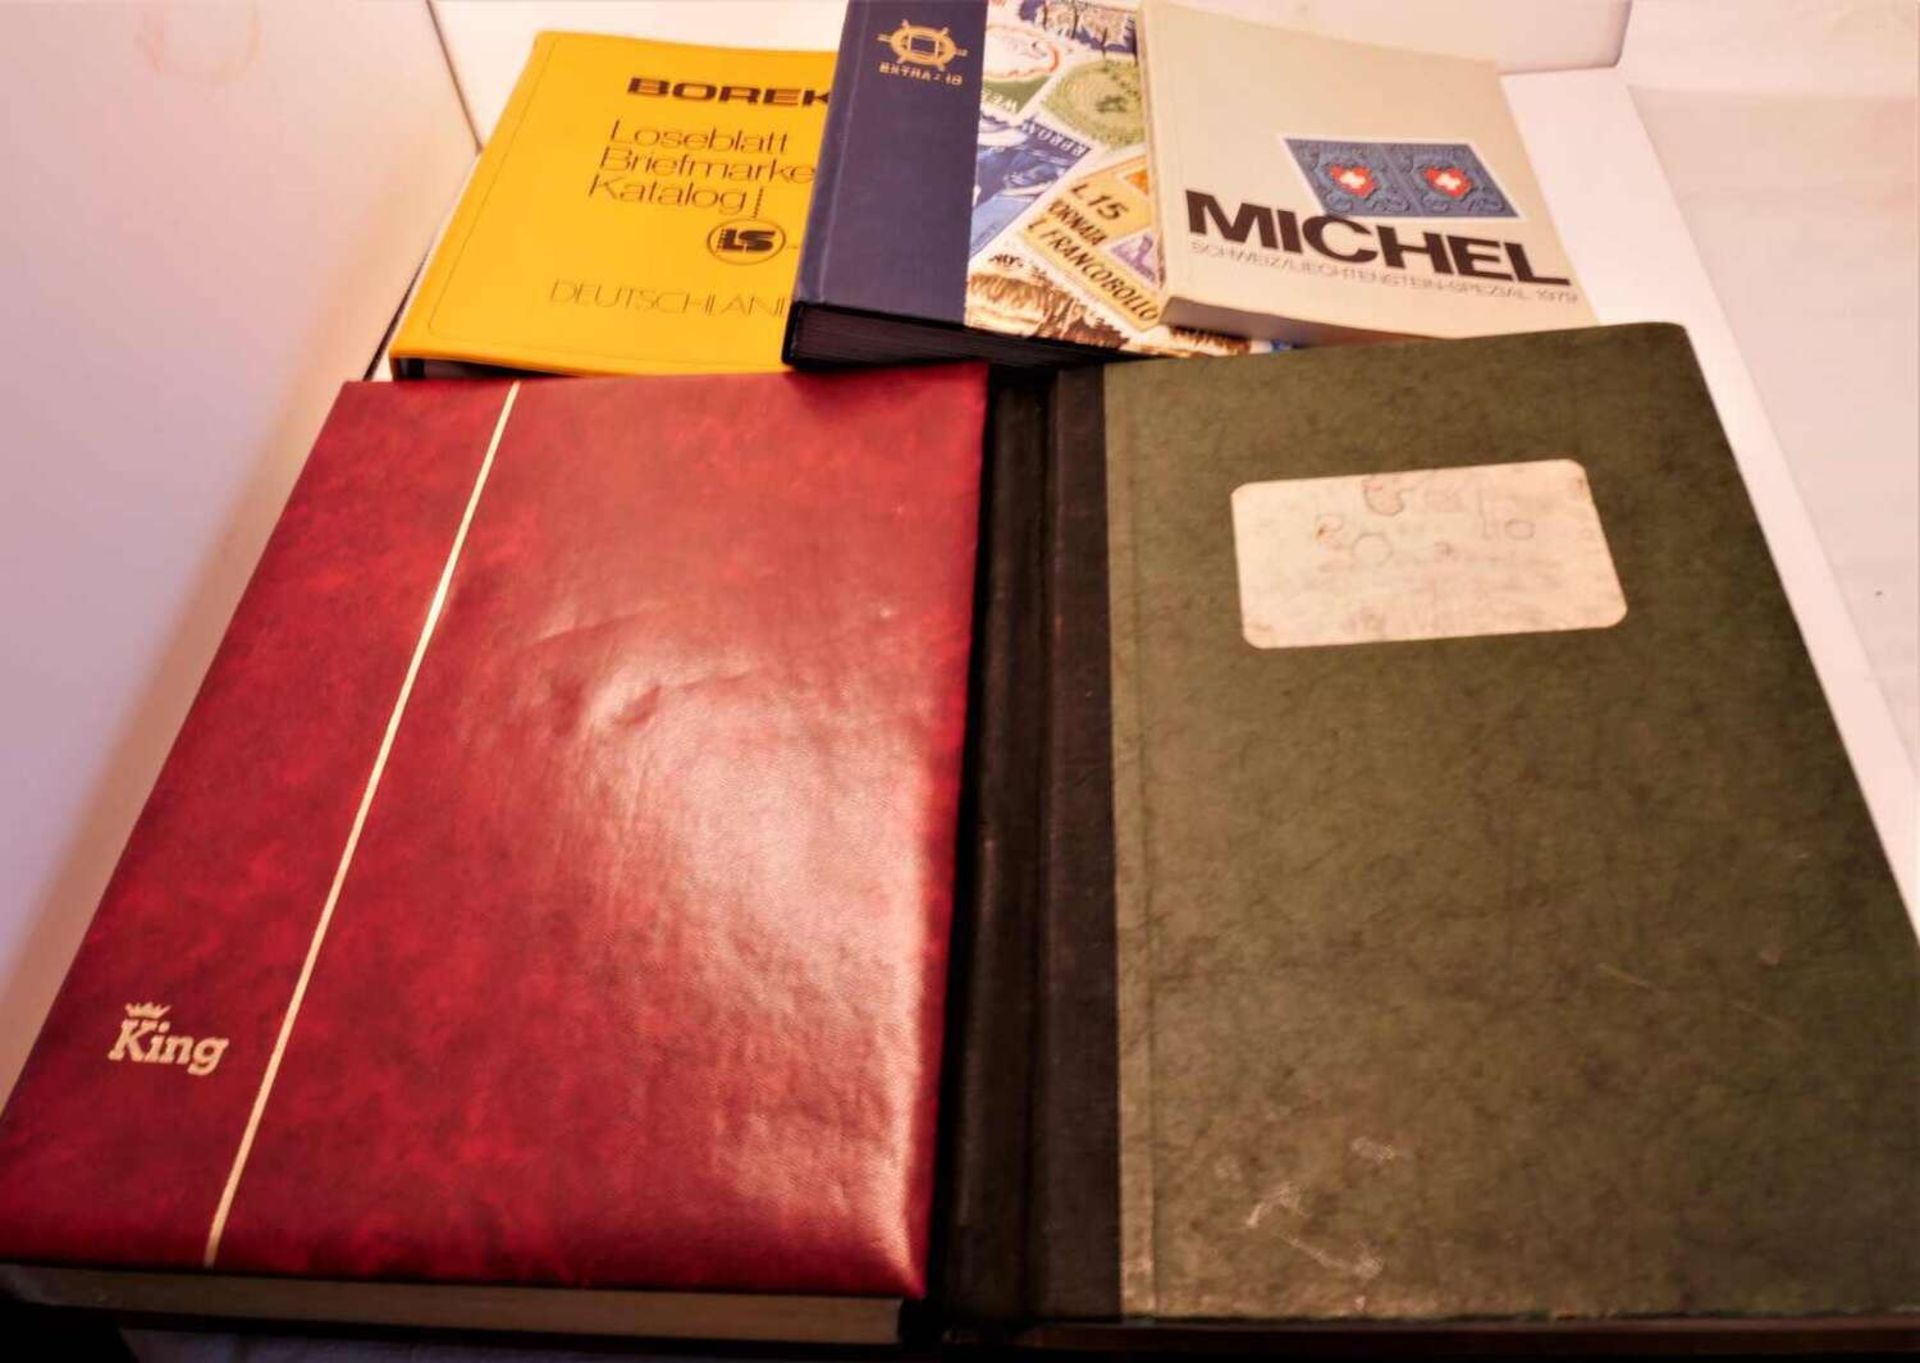 Kleines Lot Philatelie, dabei Michel, Loseblatt Briefmarken Katalog, etc. Small lot of philately,